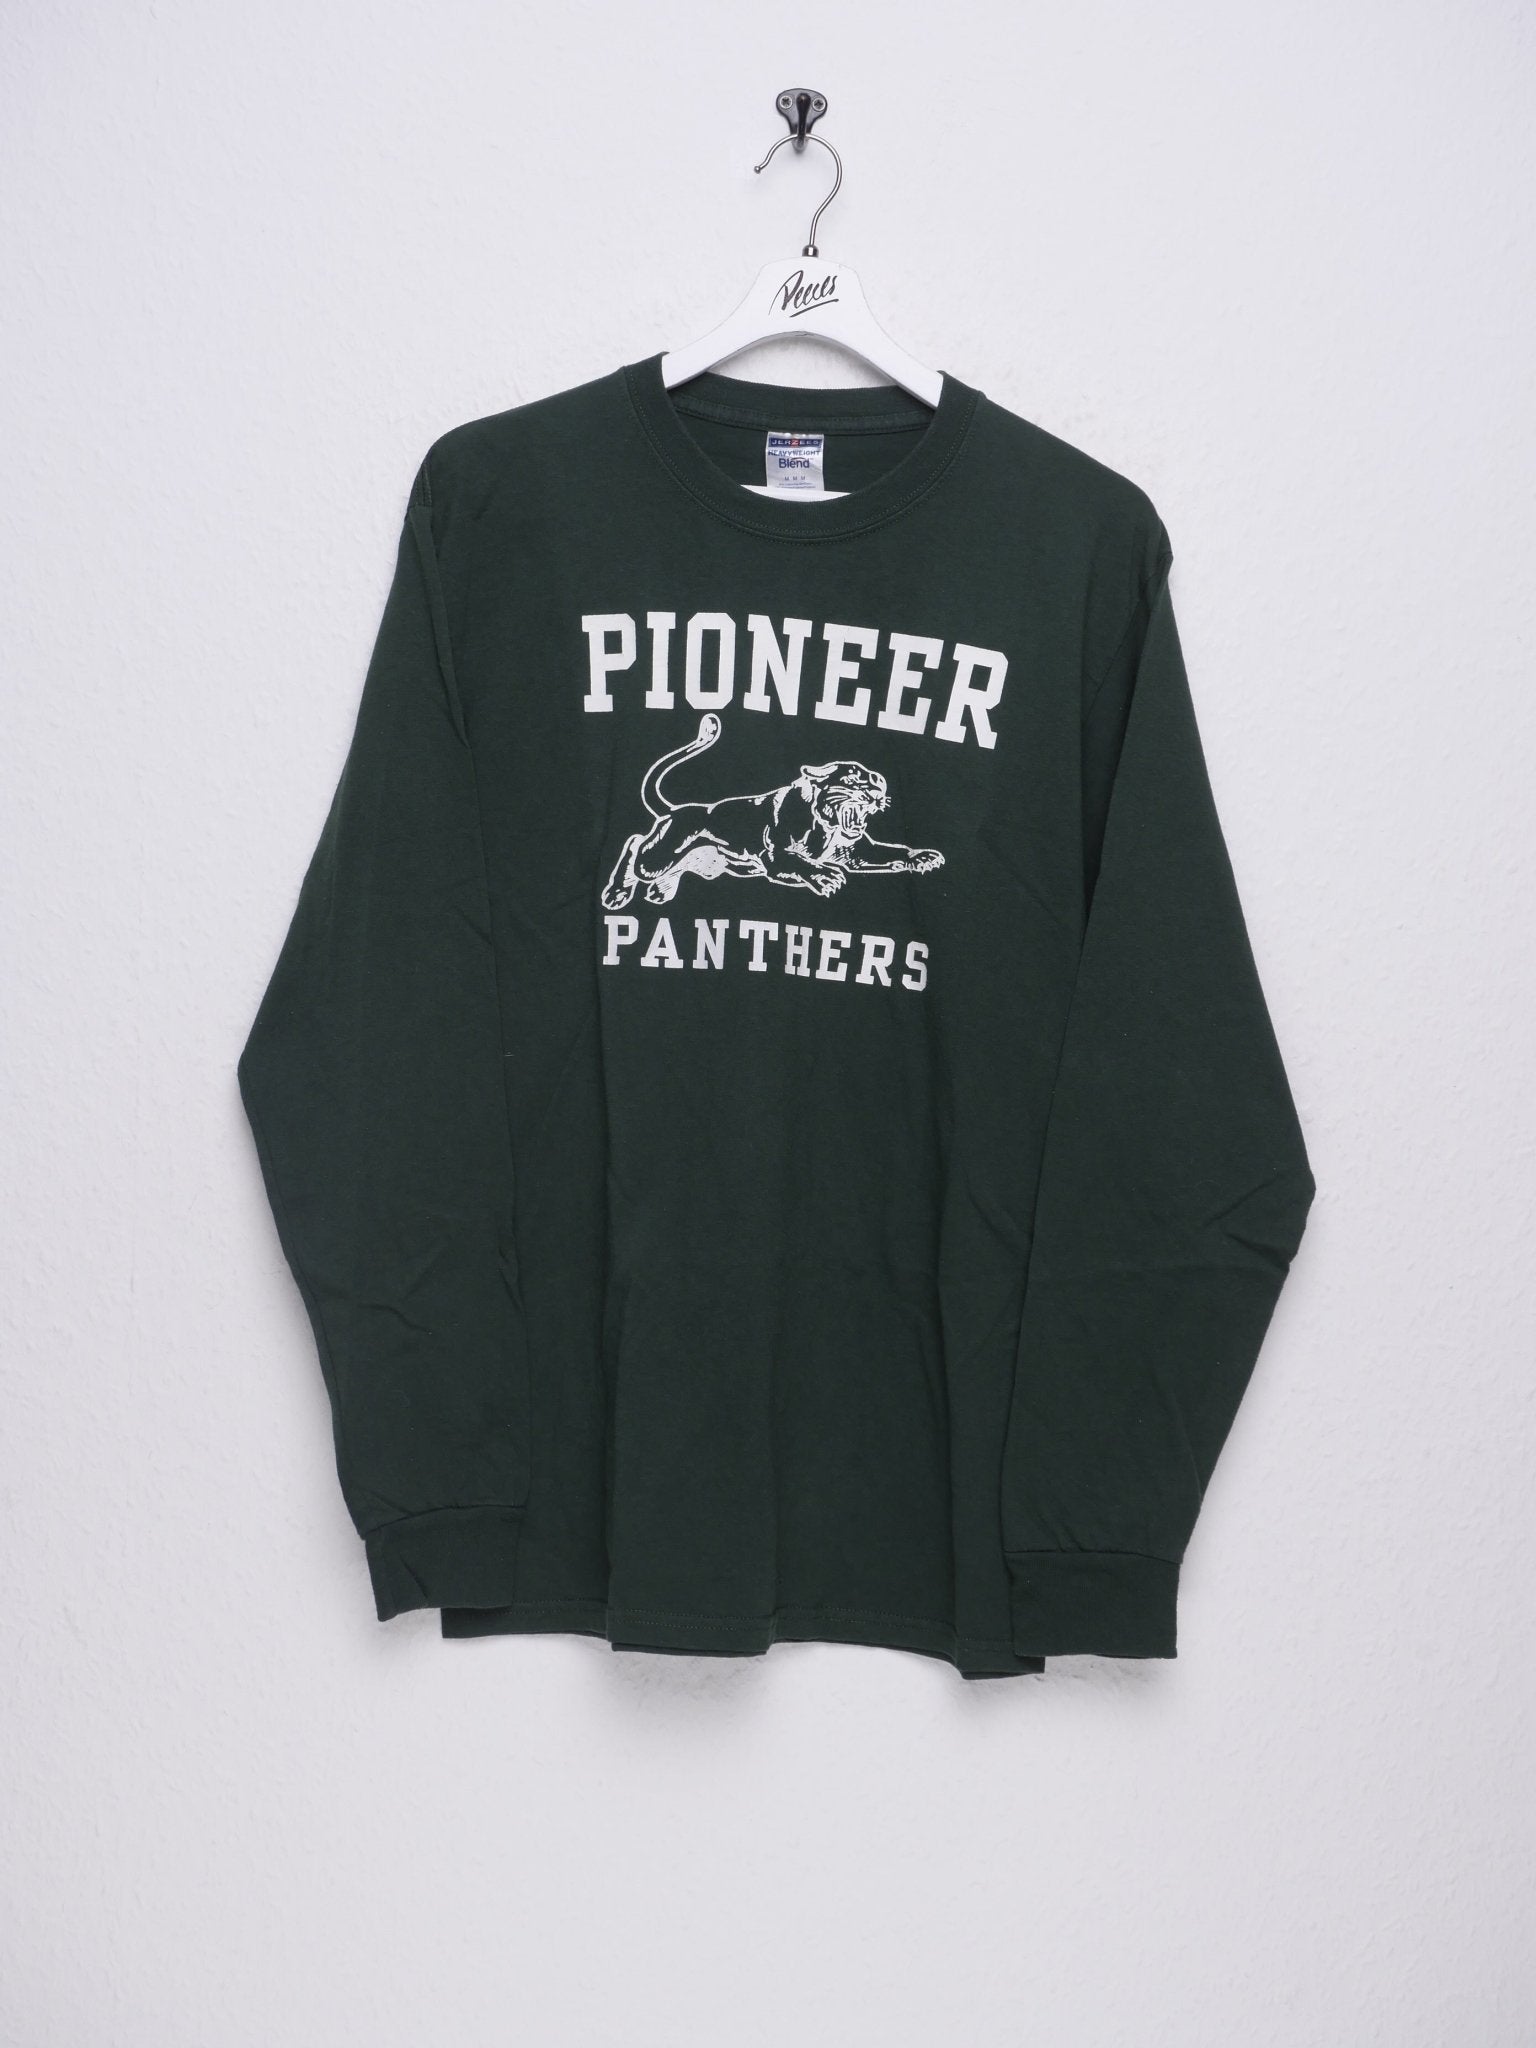 Pioneer Panthers printed Logo L/S Shirt - Peeces